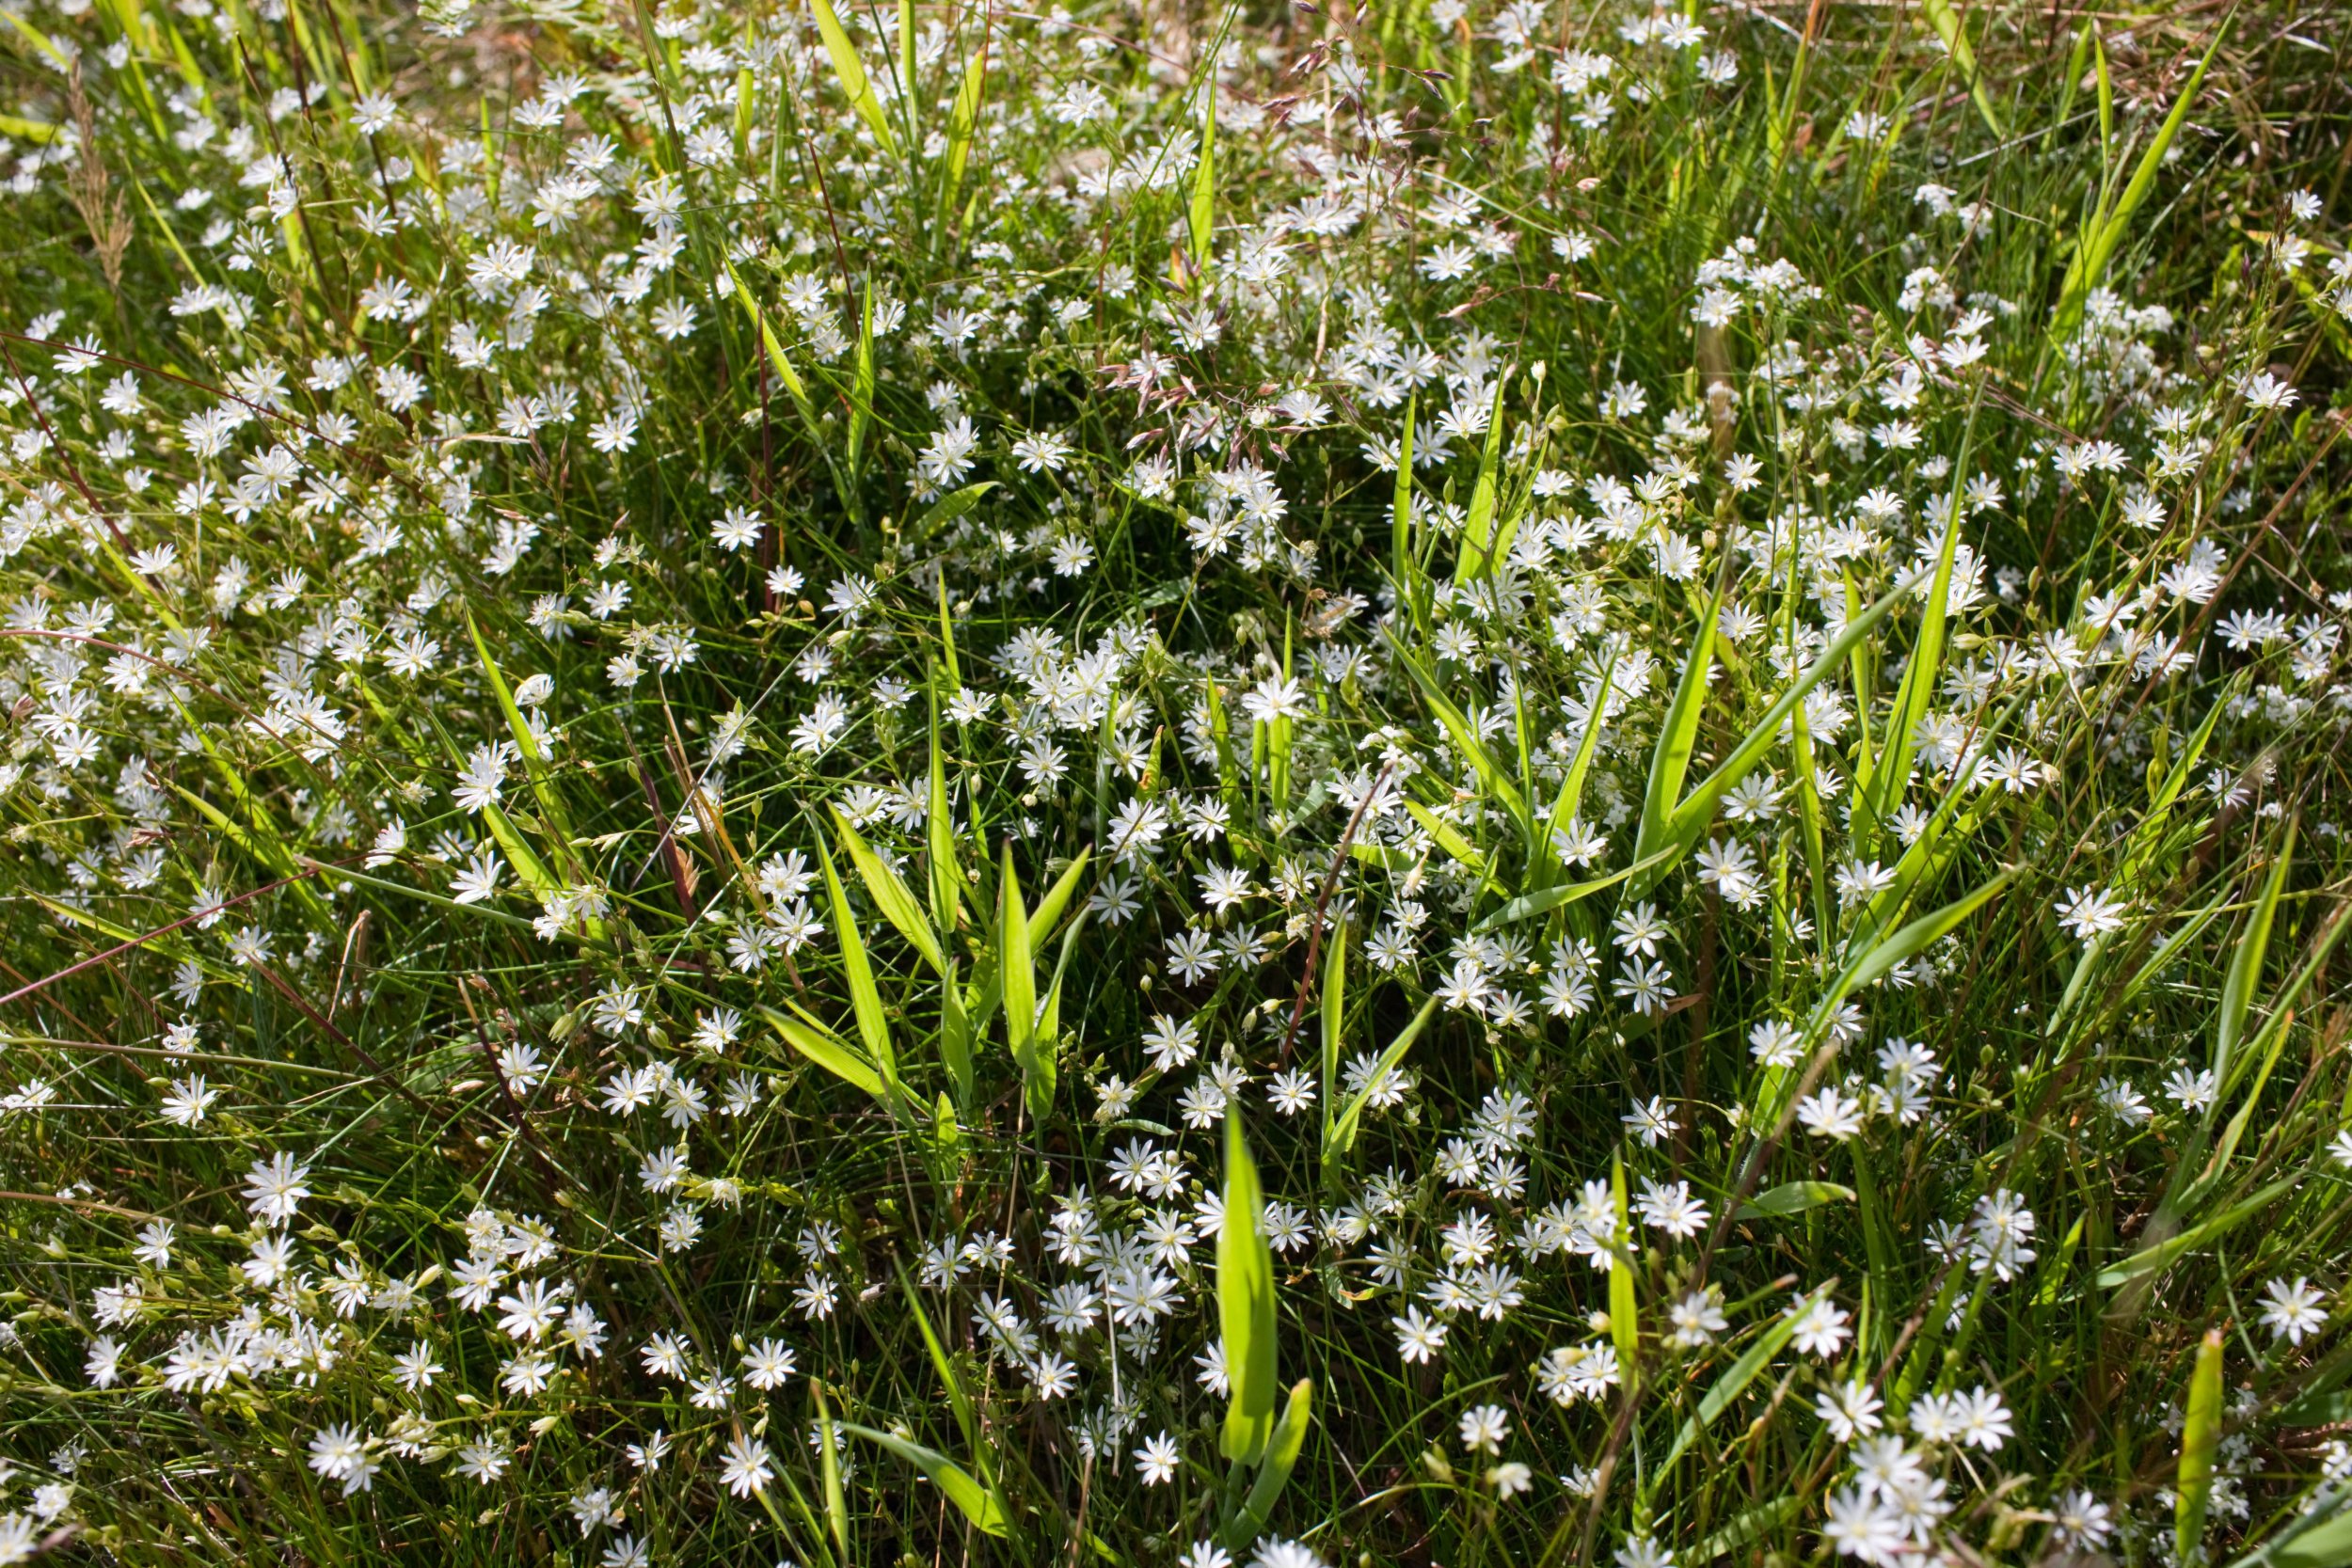 grass weeds allergy season